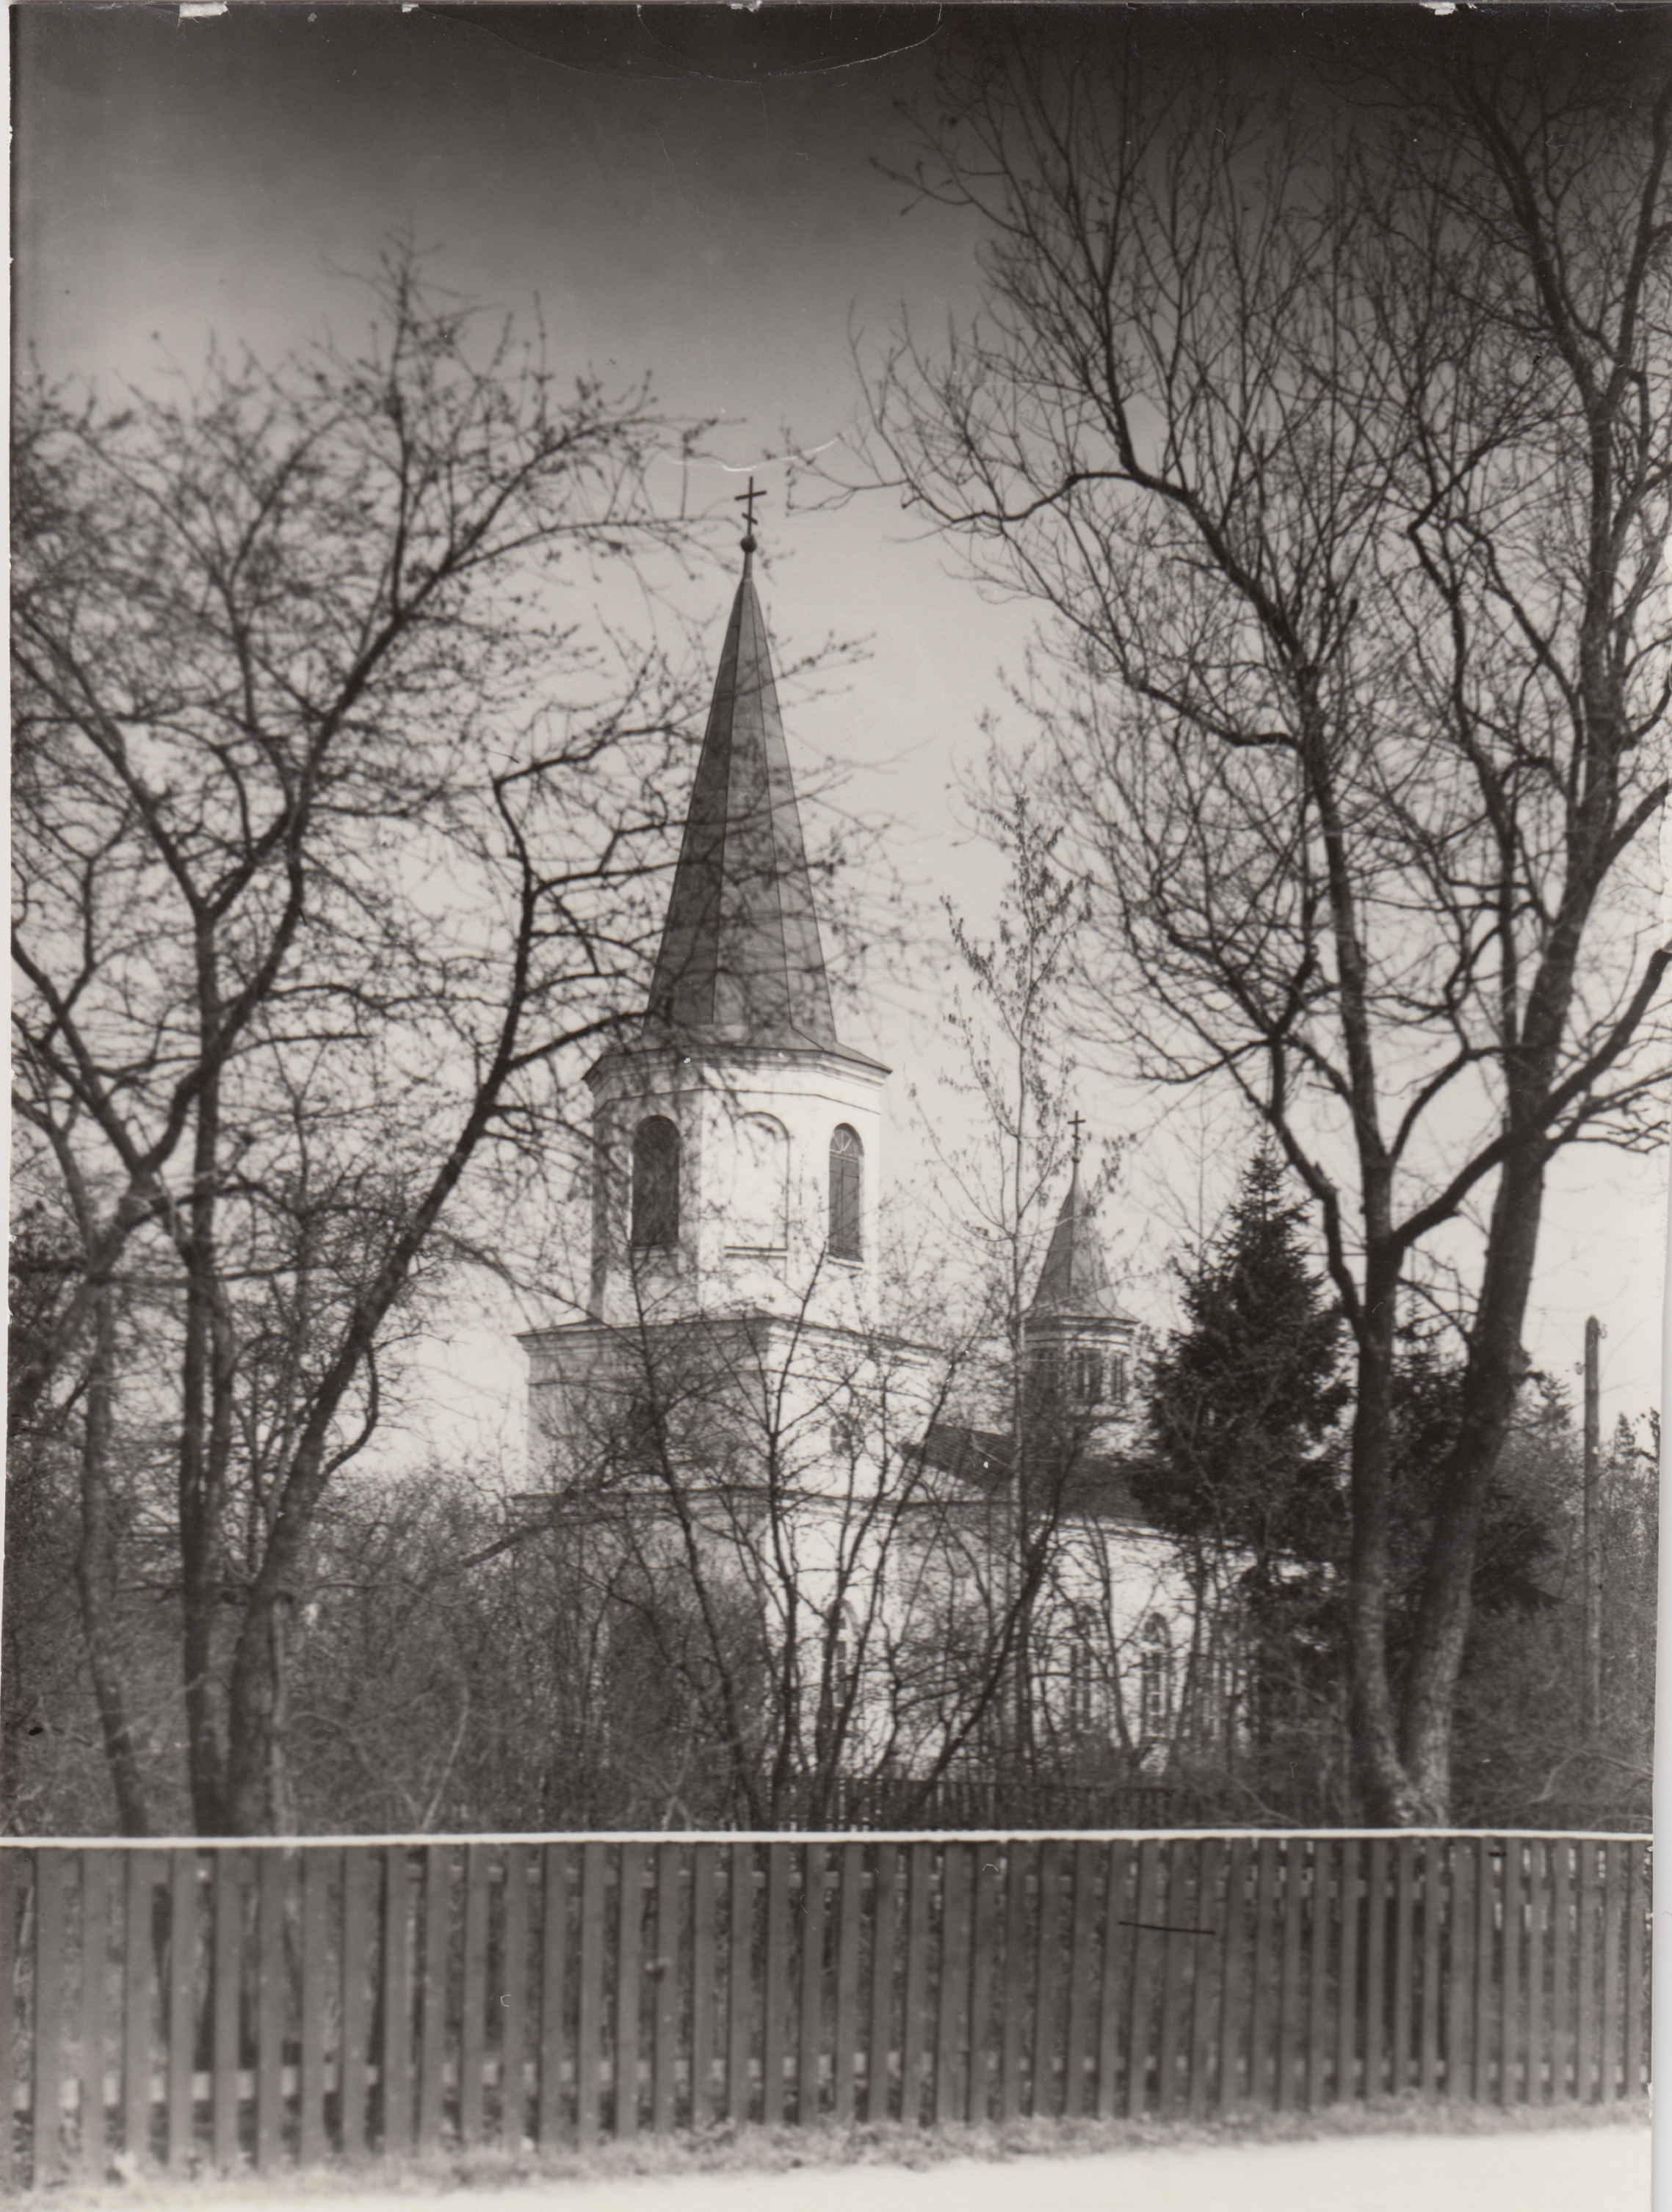 Vändra Old Tn. View of the orthodox brightness.